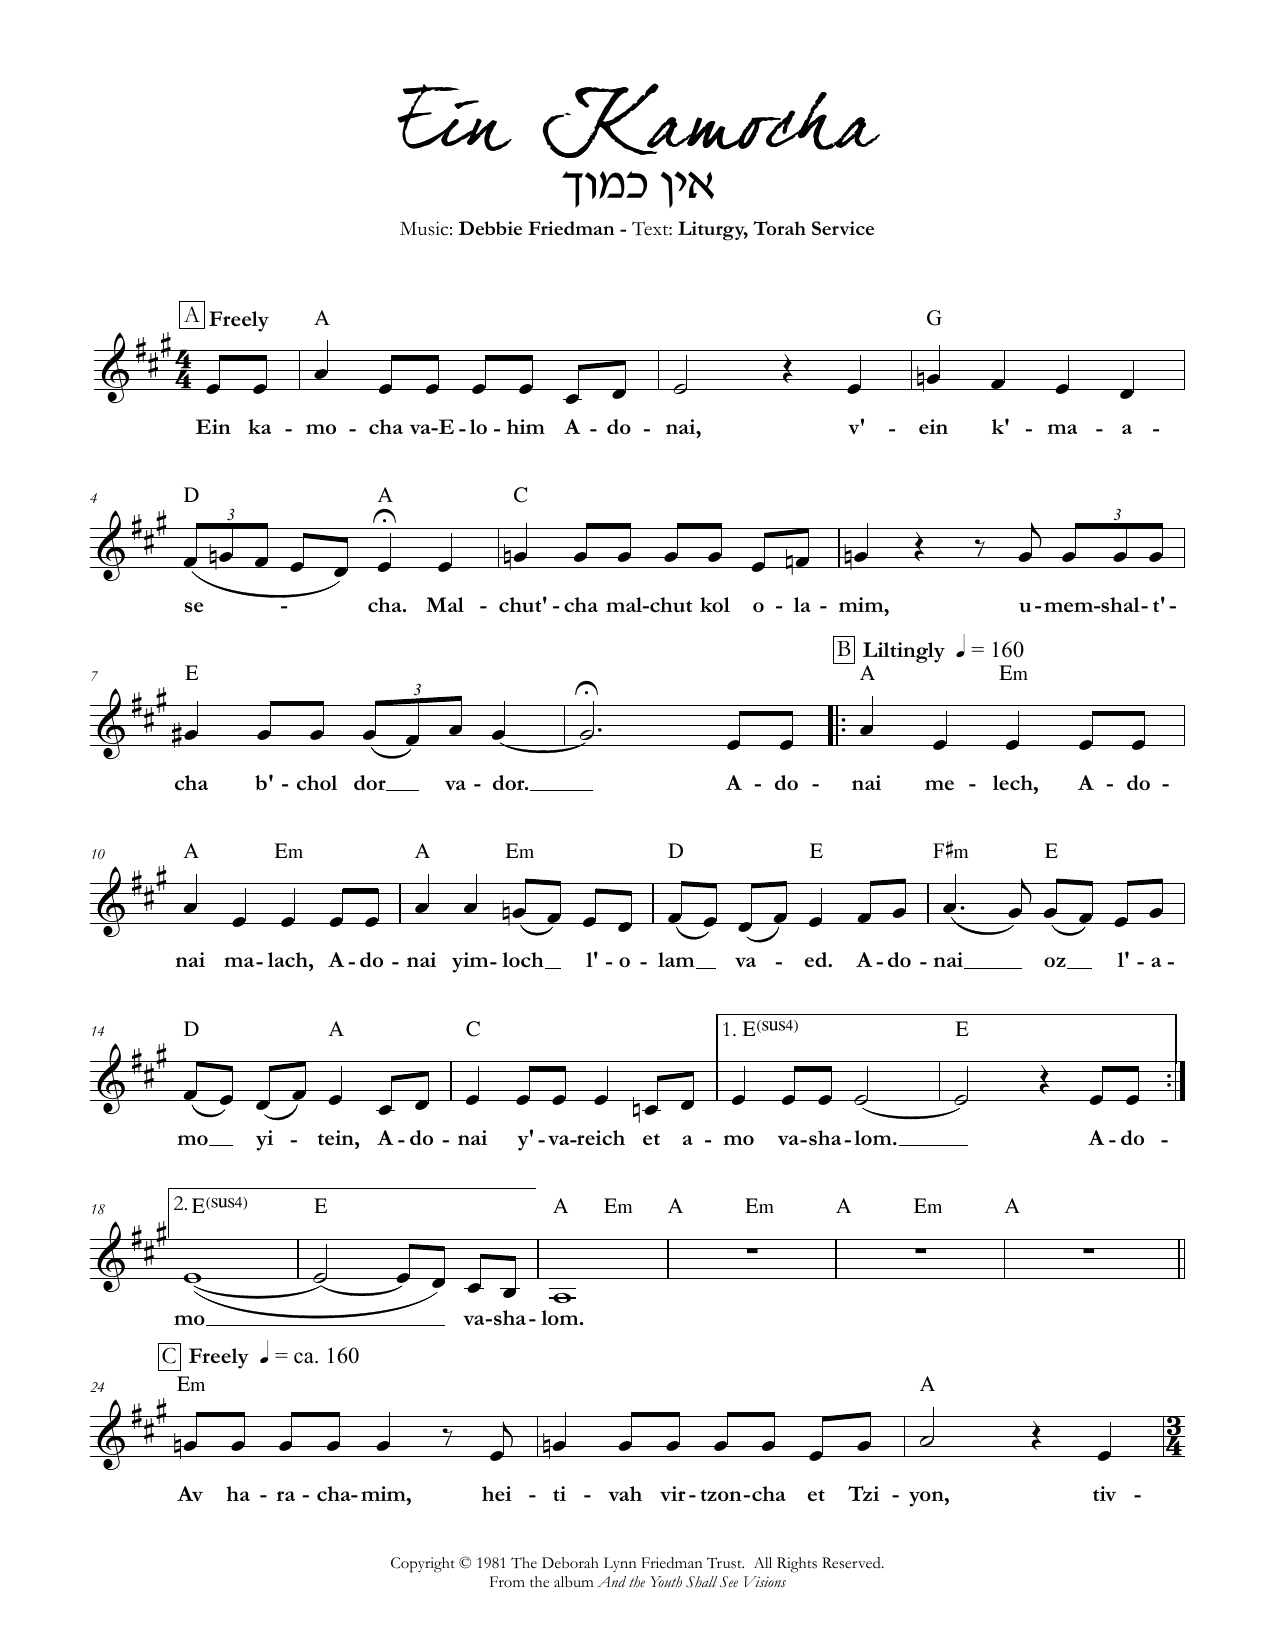 Download Debbie Friedman Ein Kamocha Sheet Music and learn how to play Lead Sheet / Fake Book PDF digital score in minutes